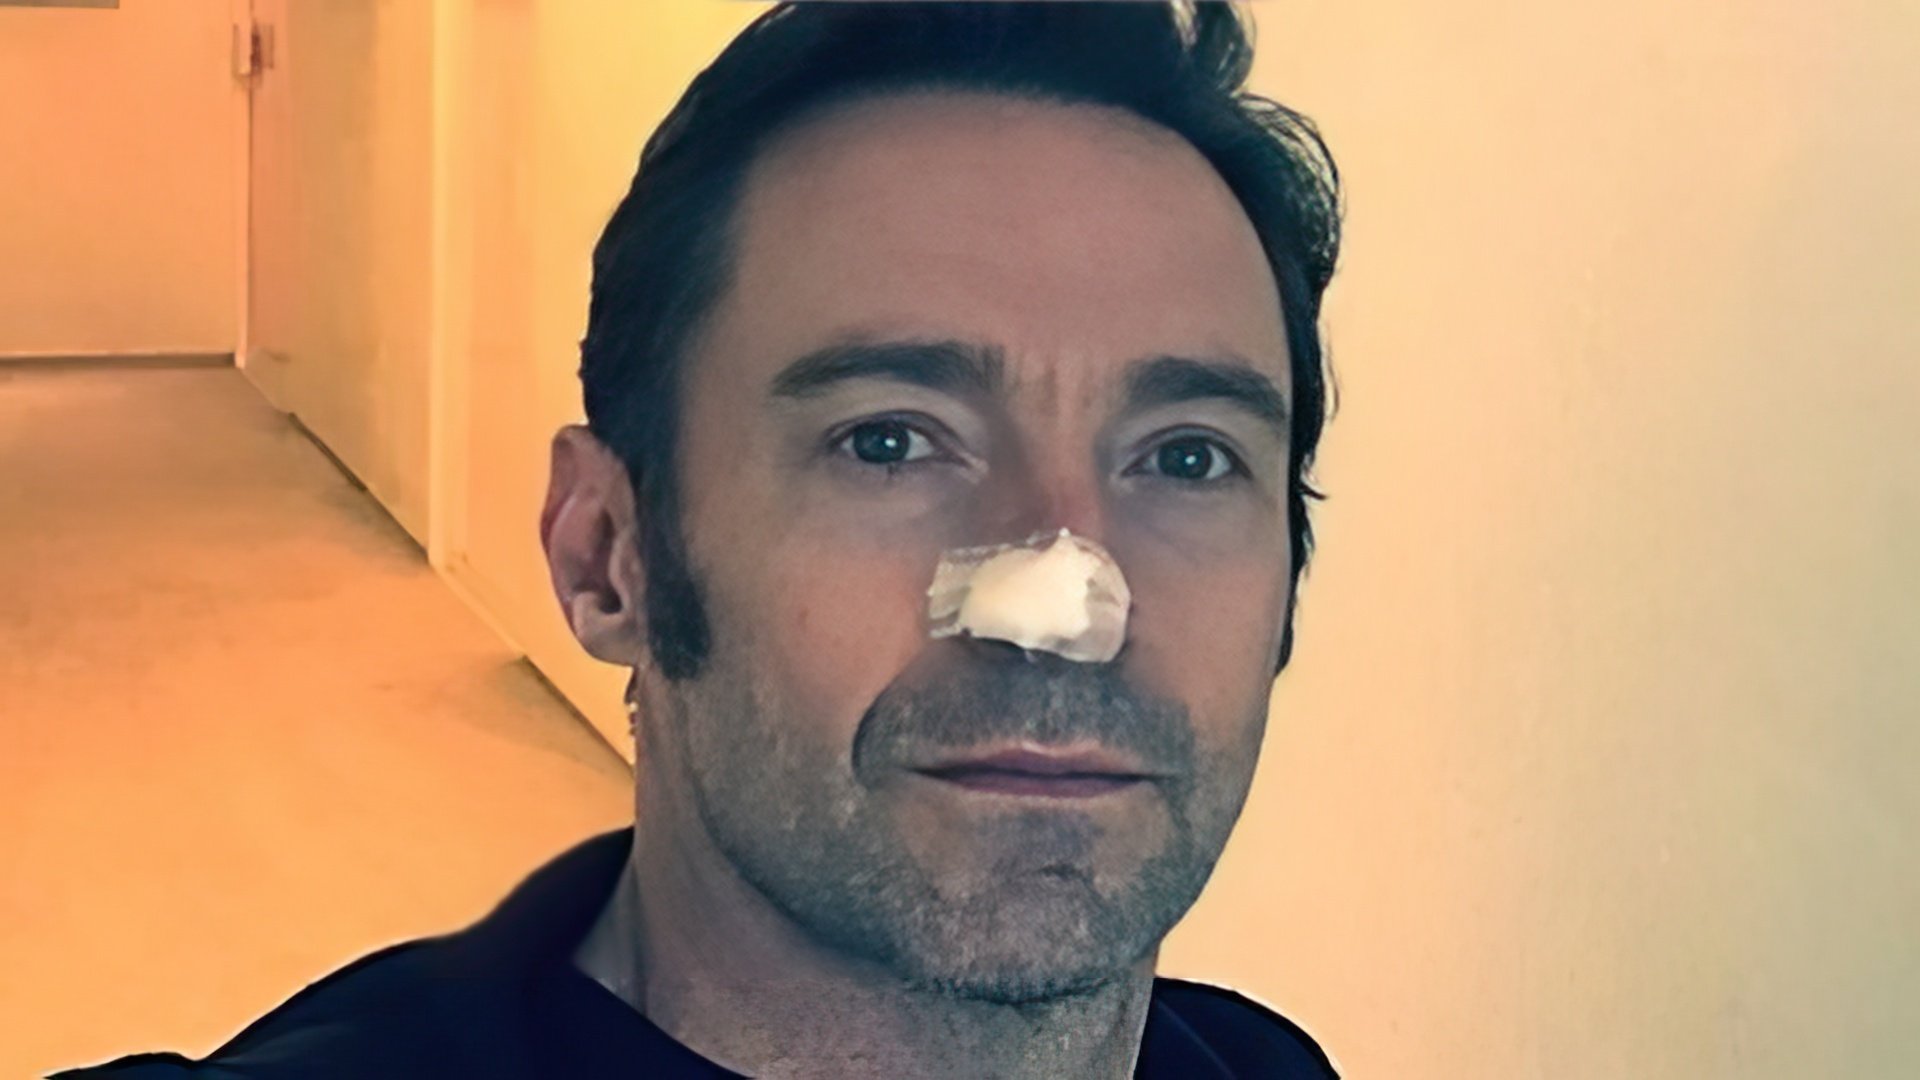 Hugh Jackman has been fighting skin cancer